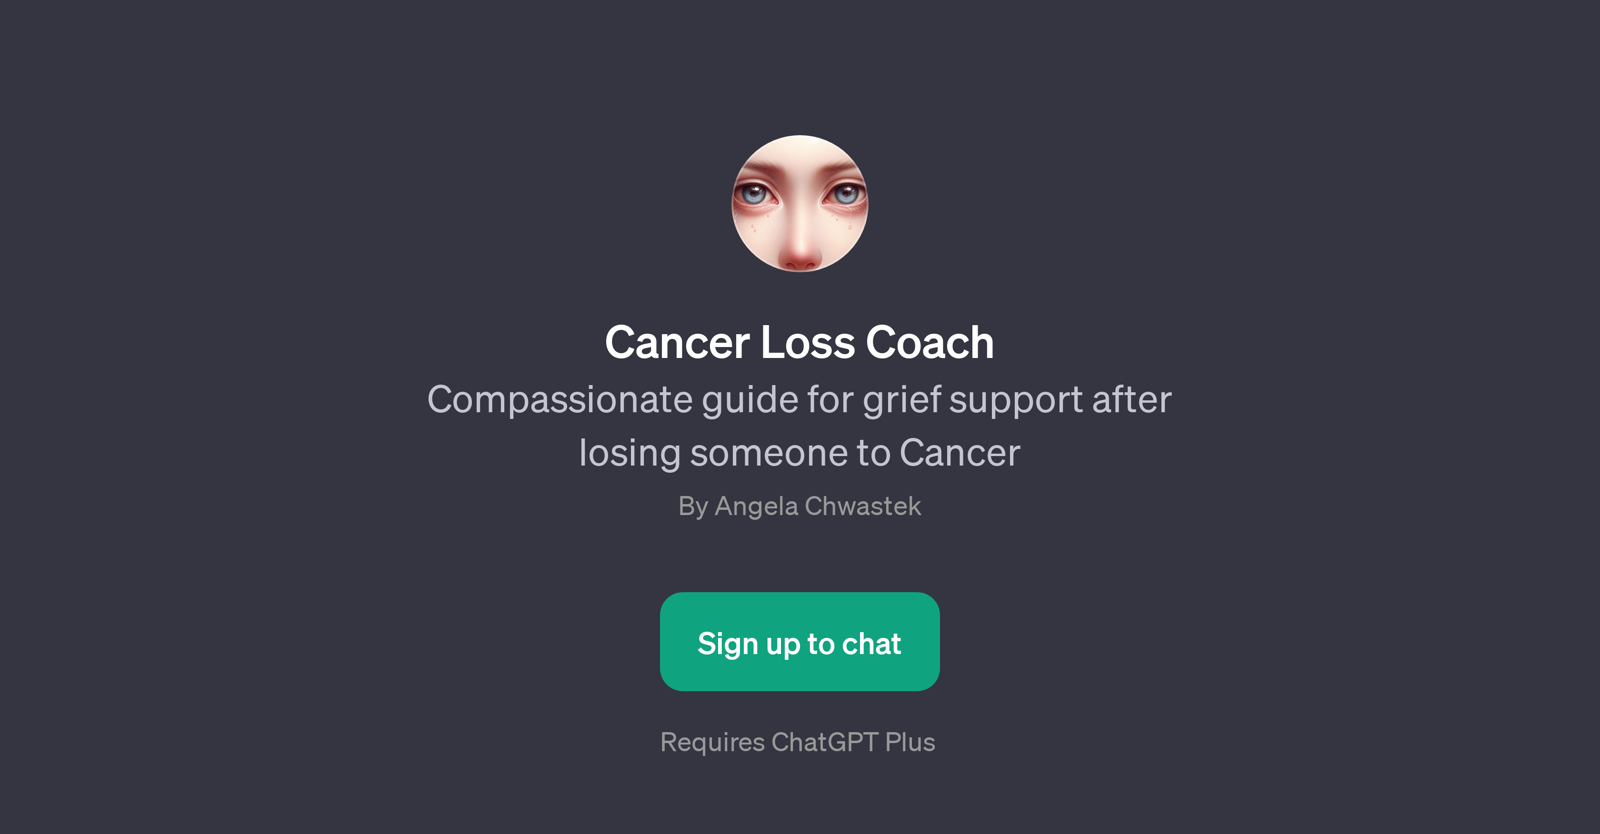 Cancer Loss Coach website